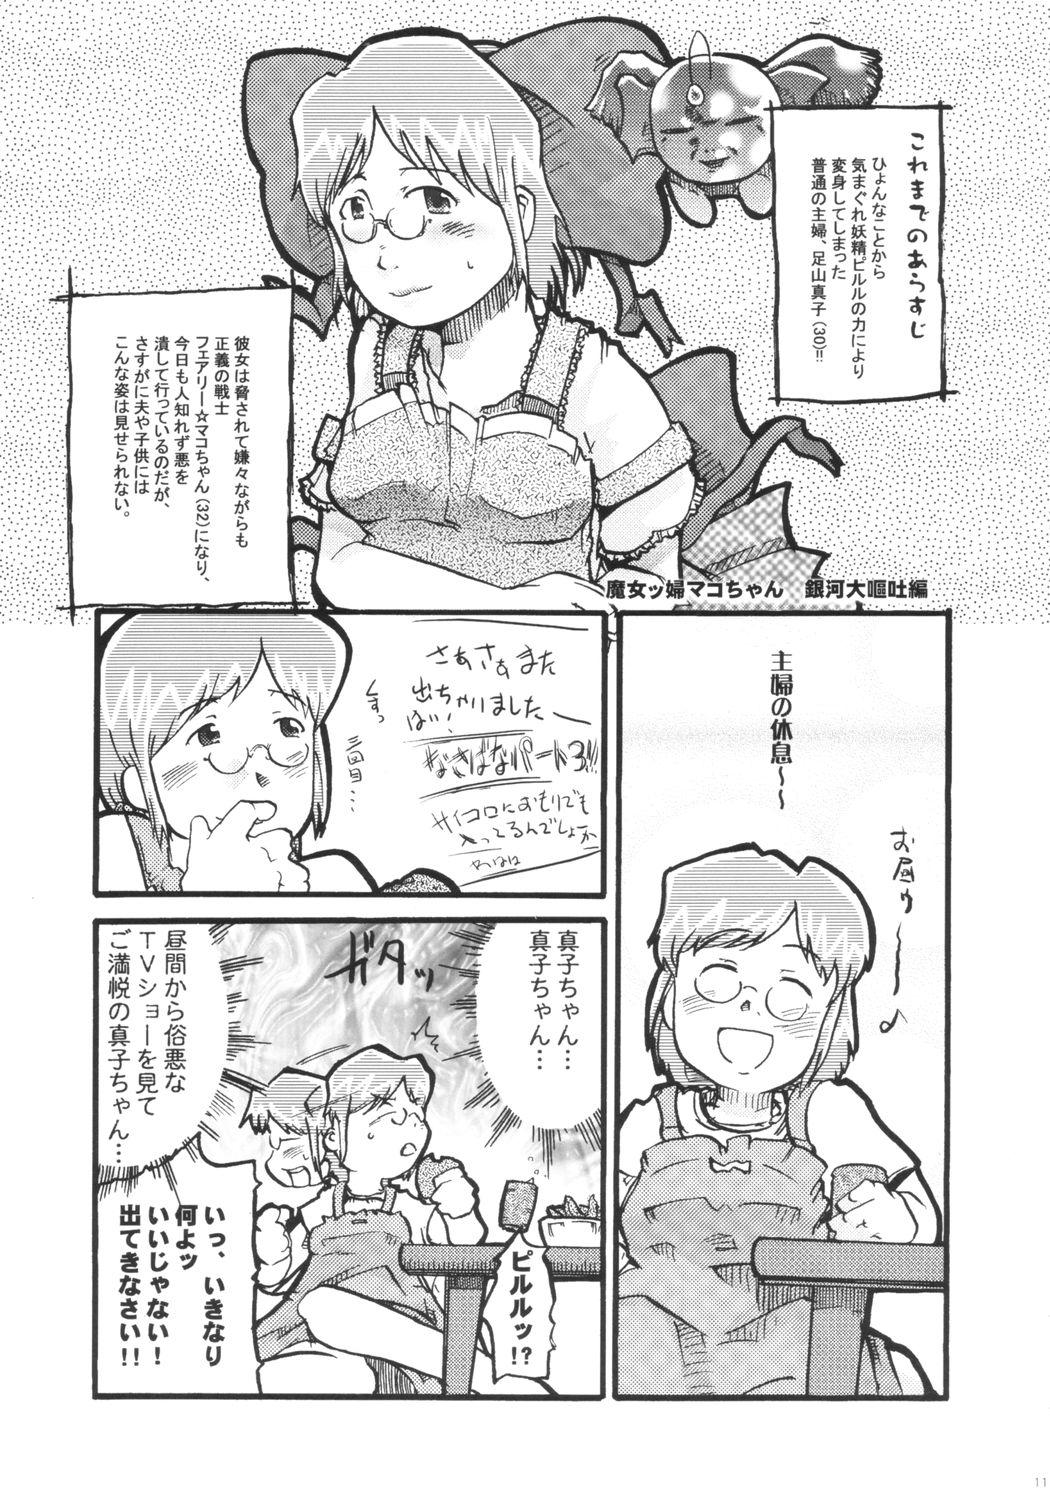 College Aoi Sora Daisuki Onnanohito Motto Daisuki Animation - Page 10